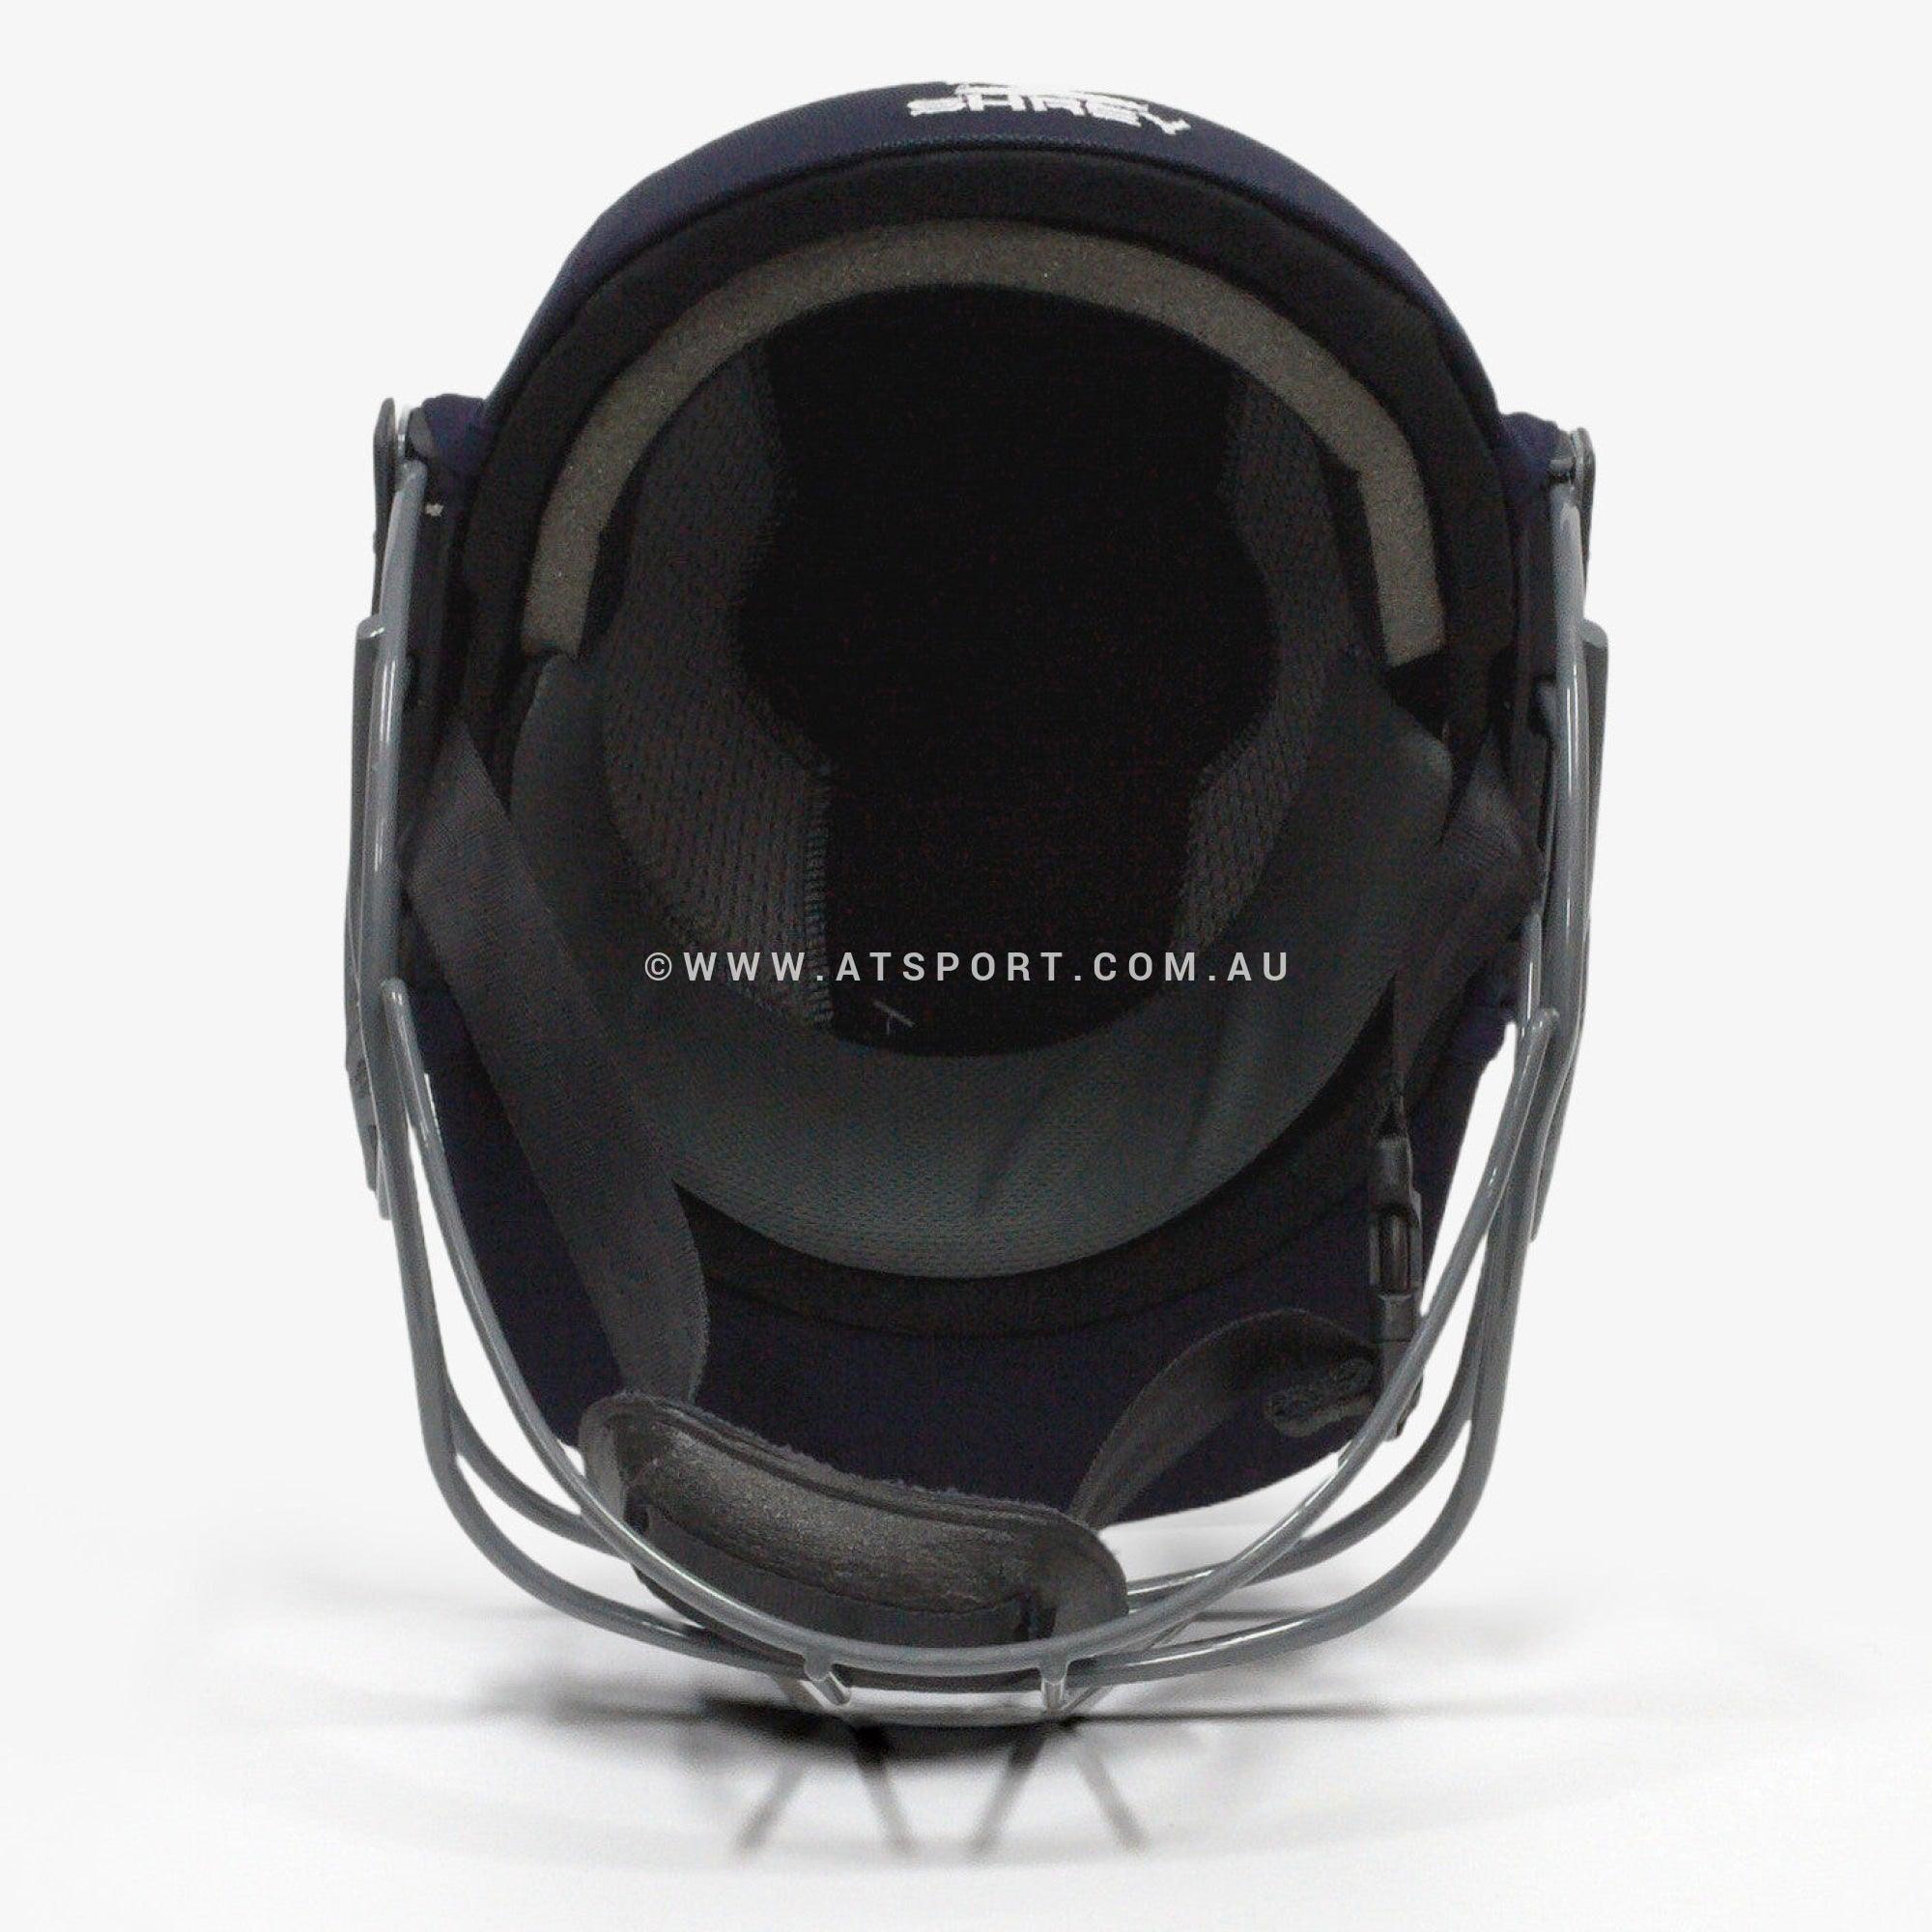 Shrey Performance 2.0 STEEL Grille Cricket Helmet - AT Sports